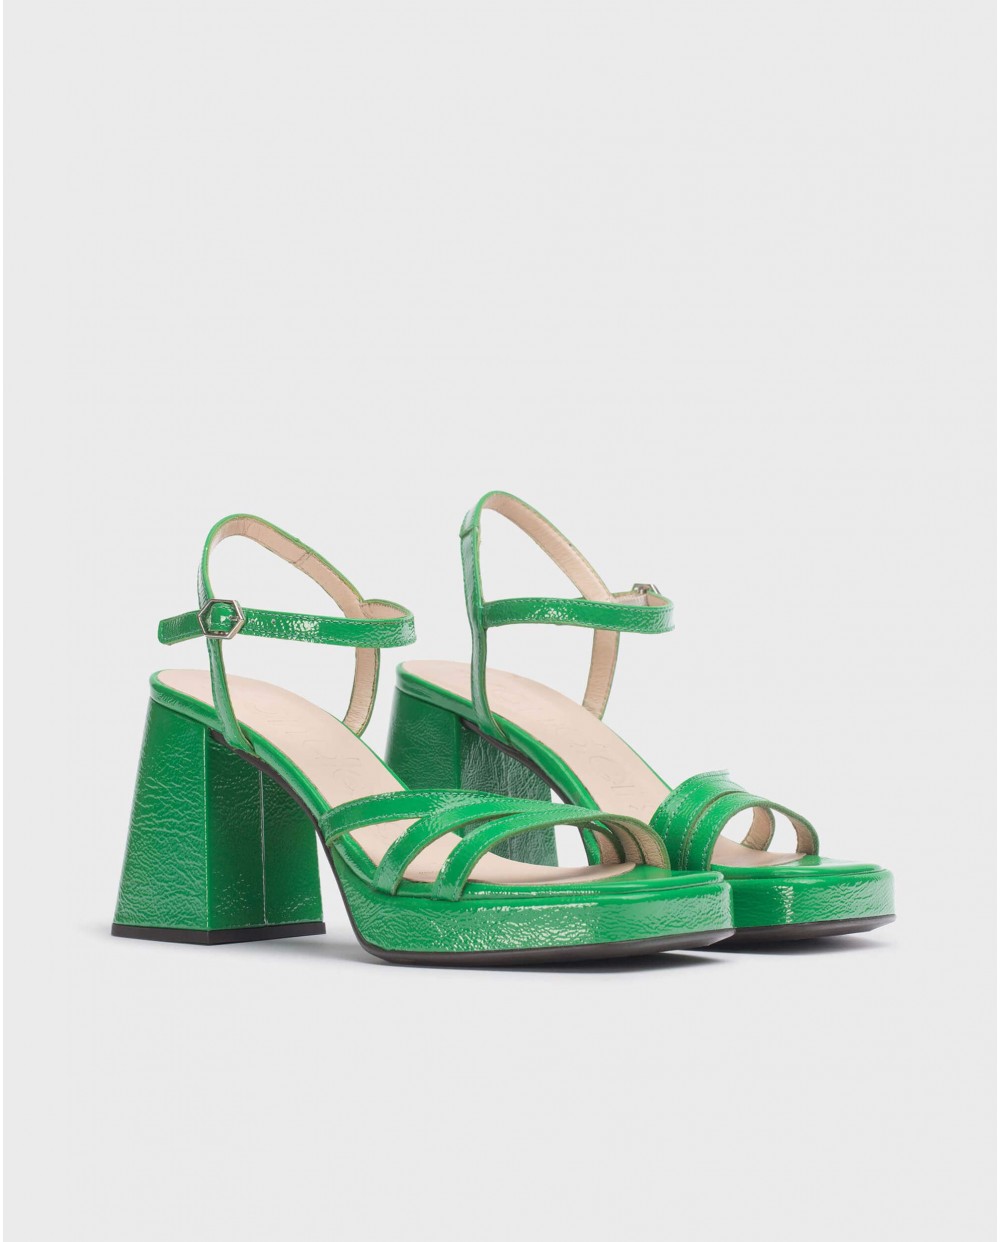 Jade Love sandal